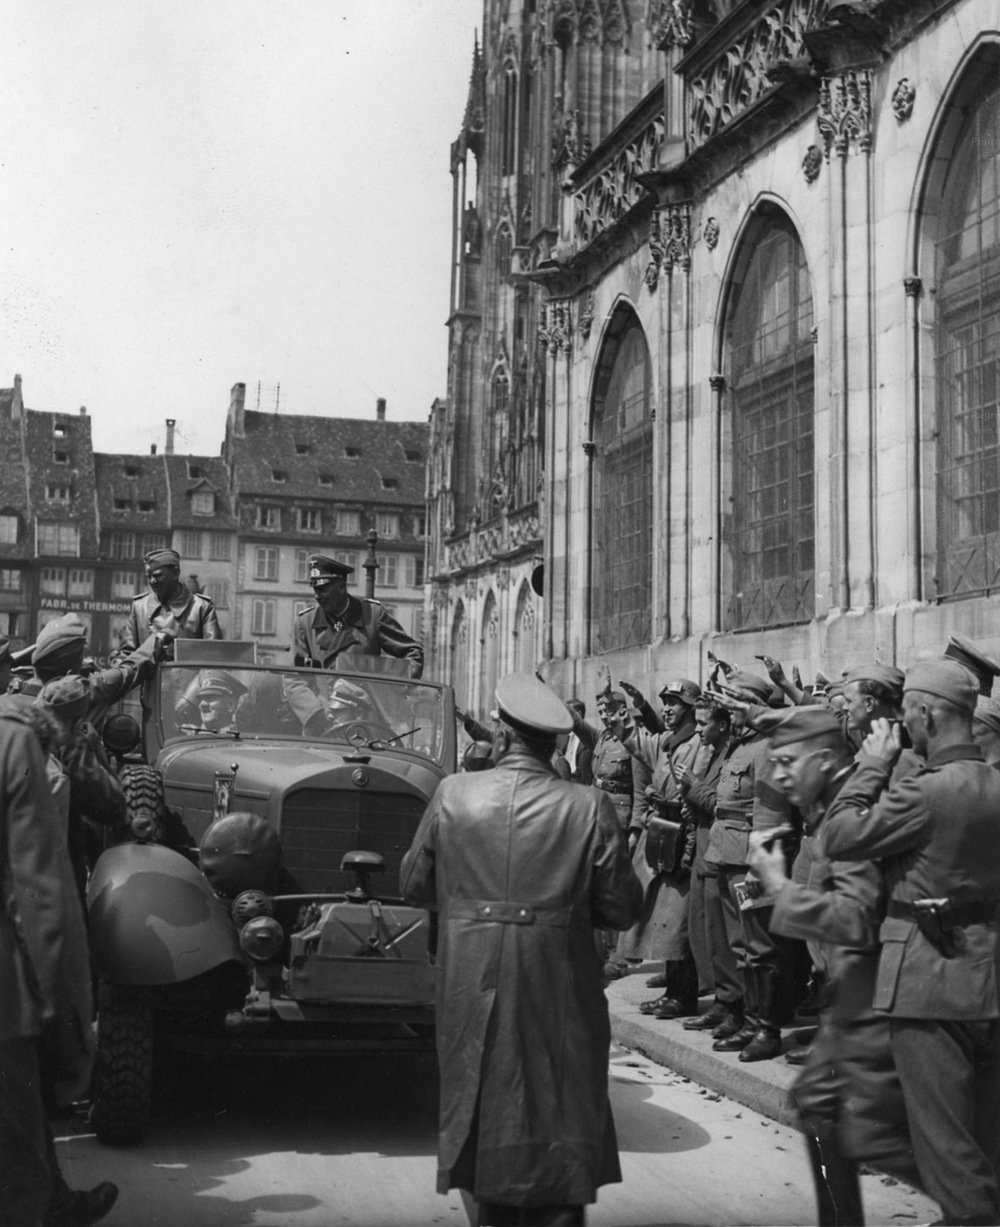 Adolf Hitler arrives at the Strasbourg cathedral to visit it